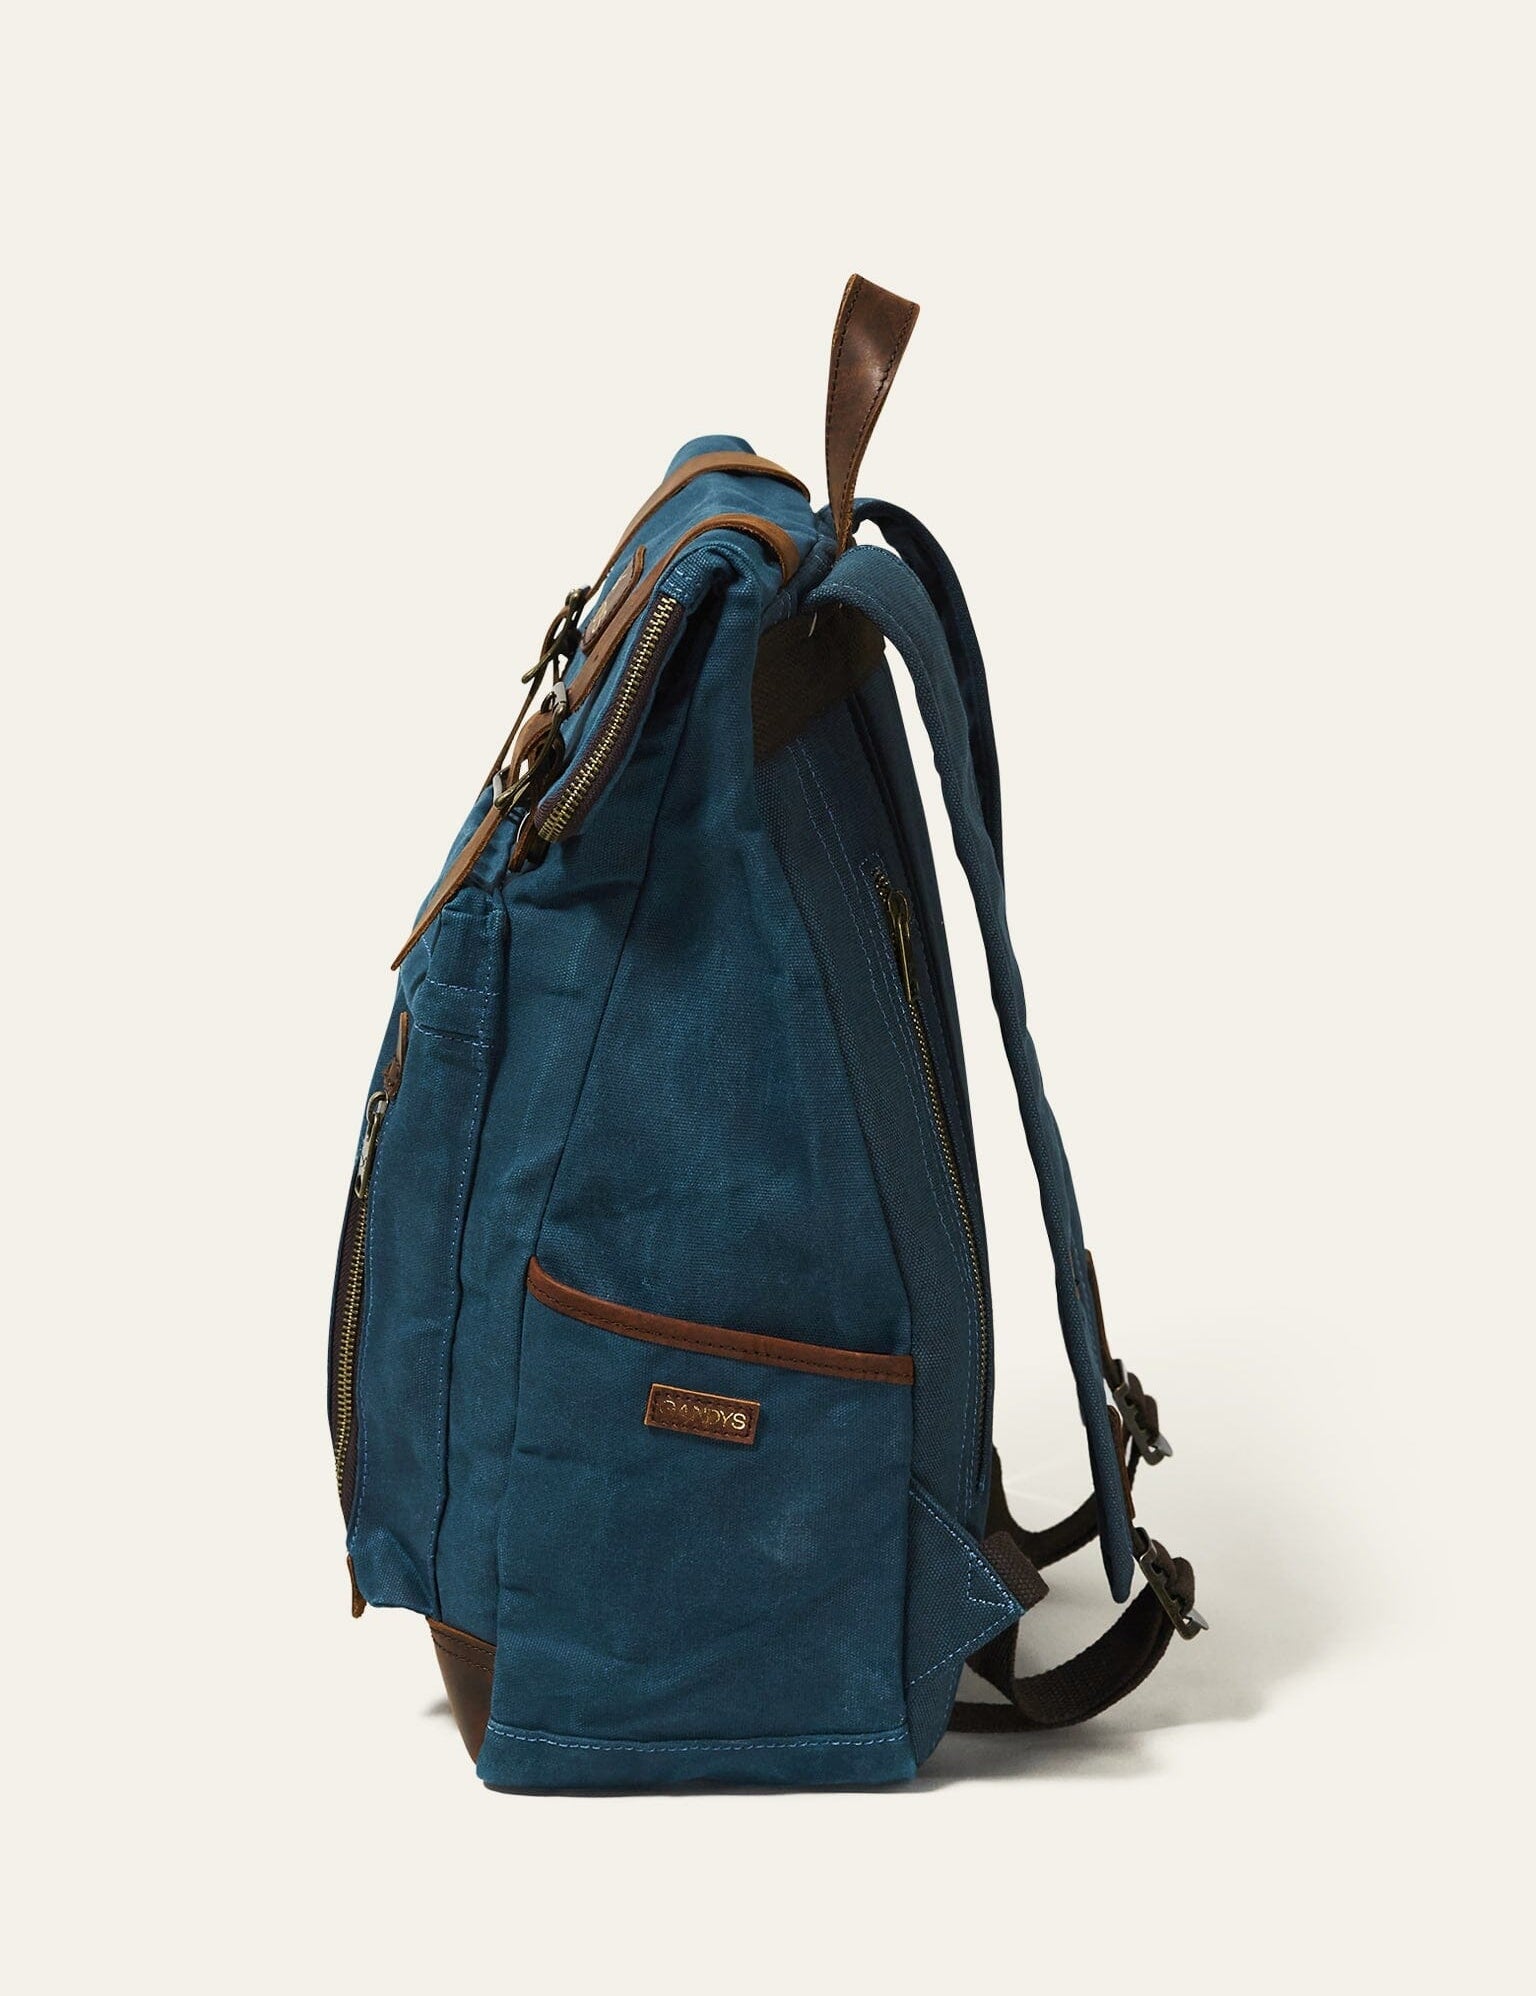 teal-waxed-authentic-bali-backpack-413266.jpg